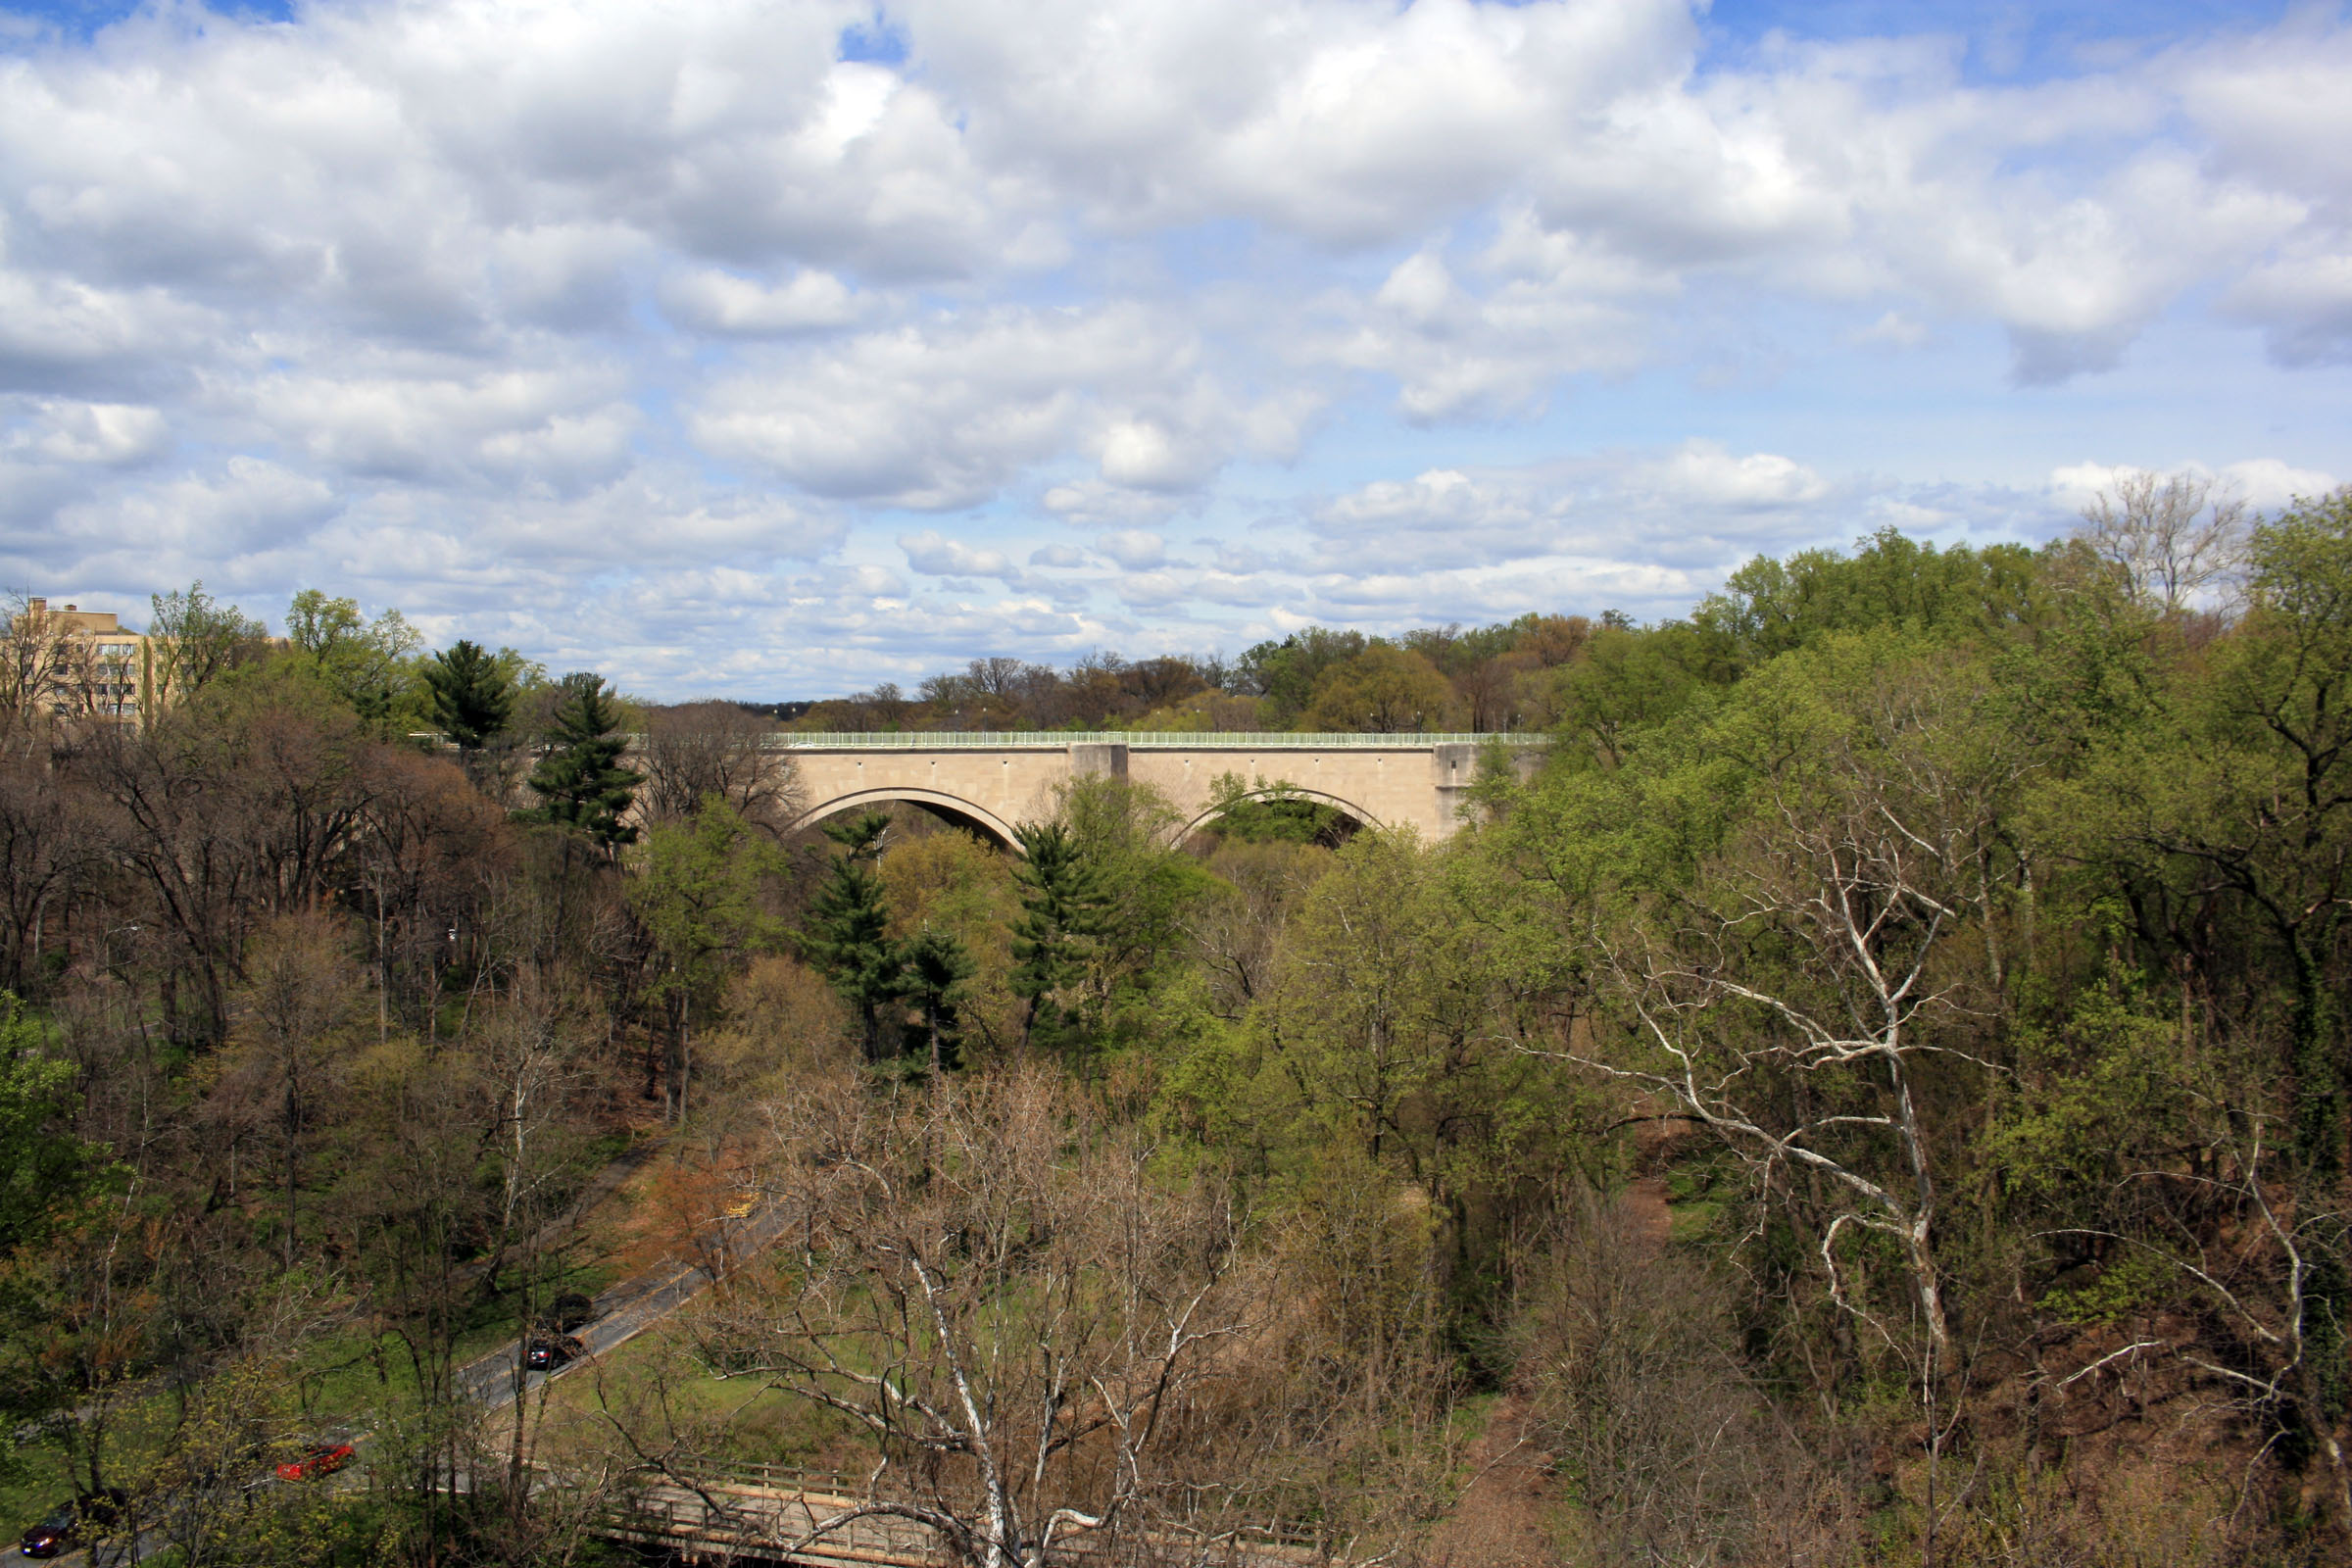 The Duke Ellington Bridge over Rock Creek